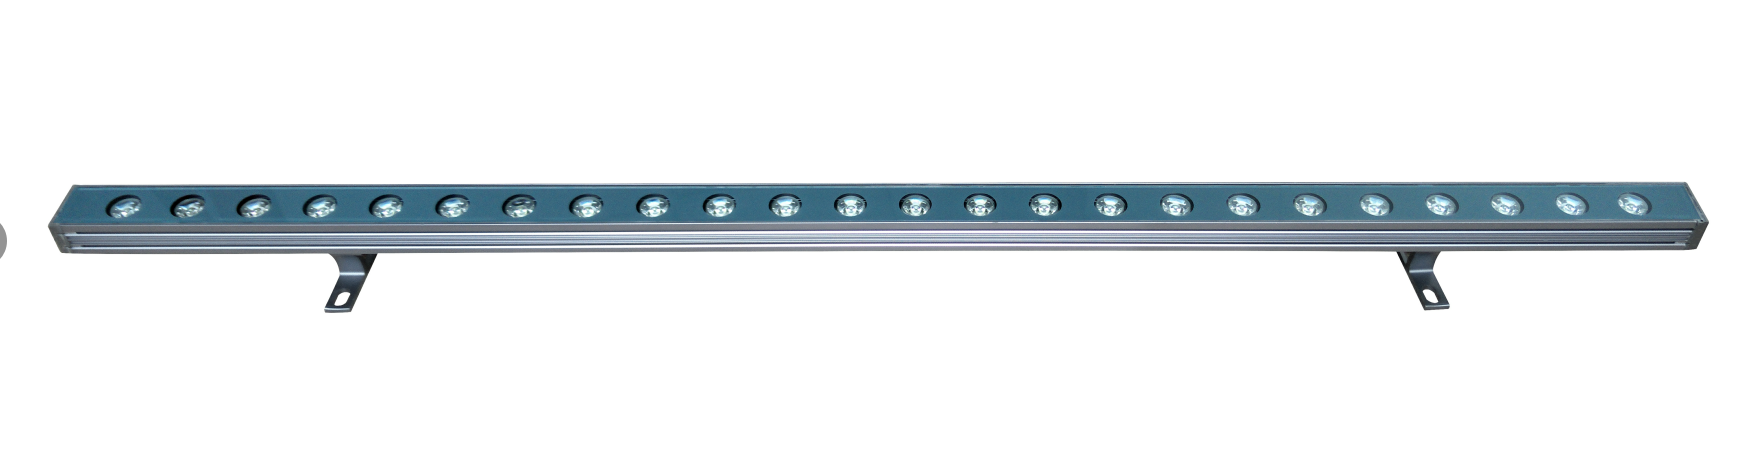 LED wall washer light WL022